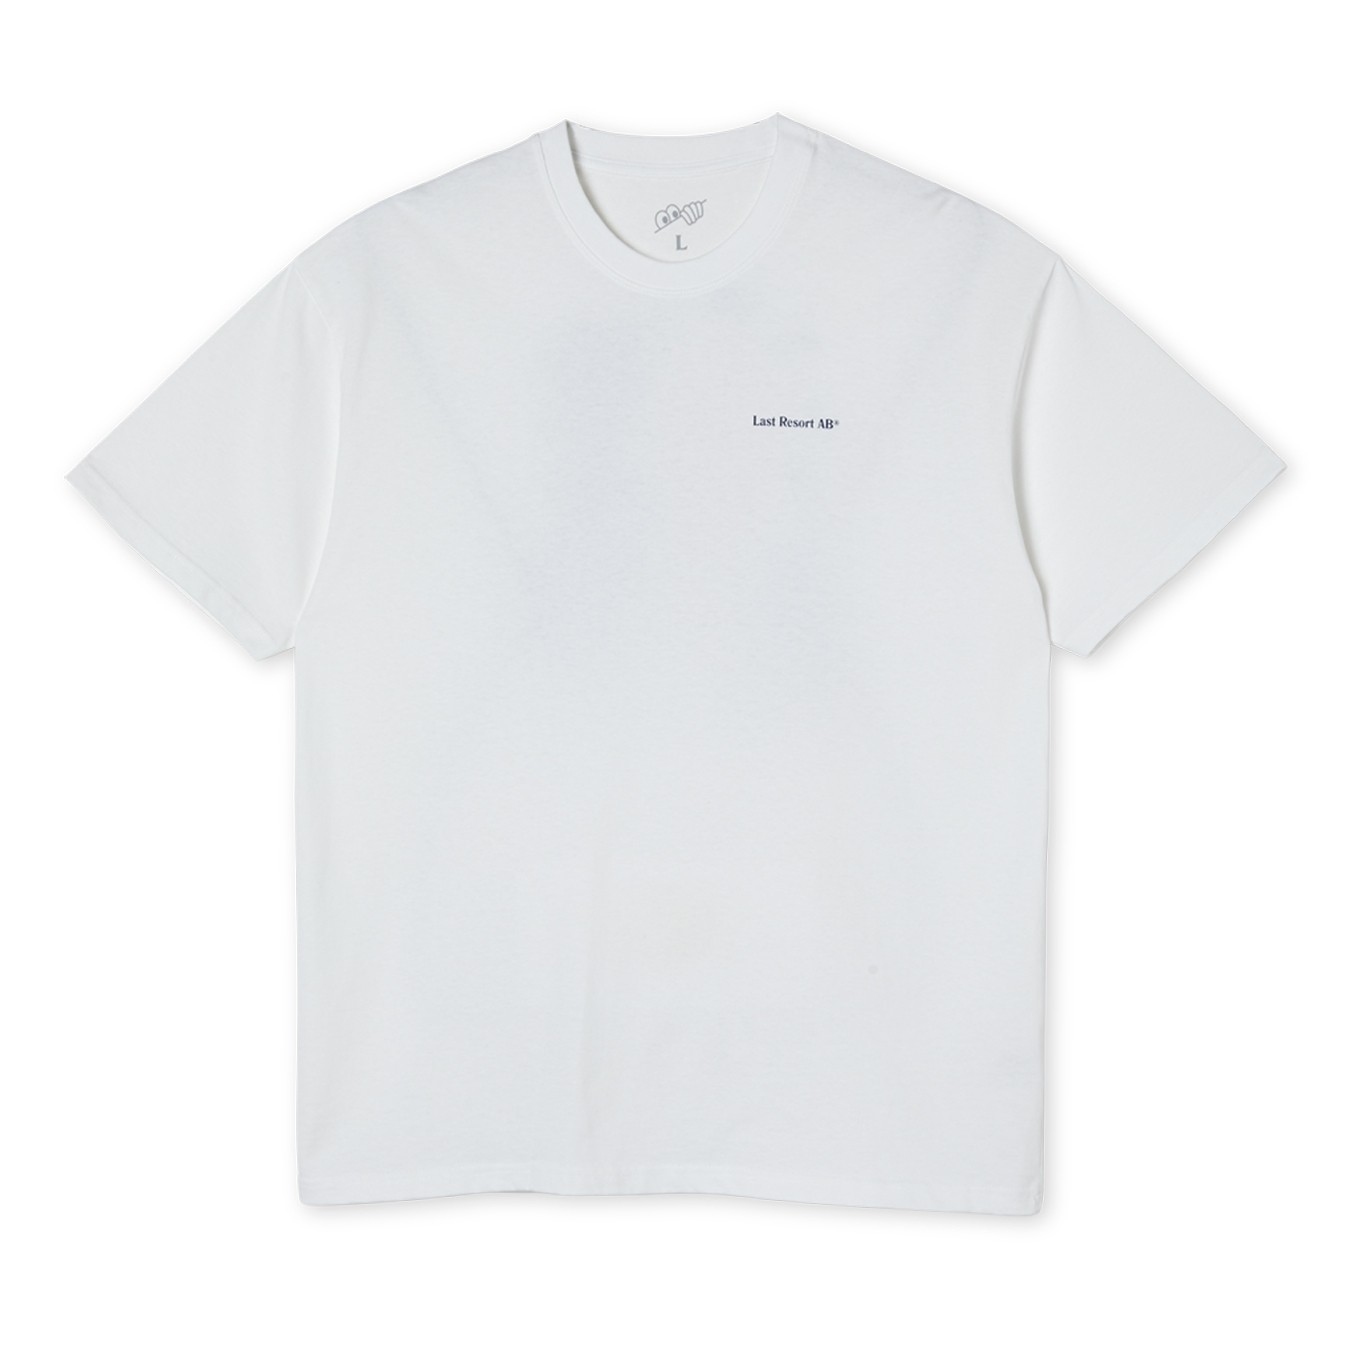 Last Resort AB Wall T-Shirt (White) - LR-D5-WALLTEE-WHT - Consortium